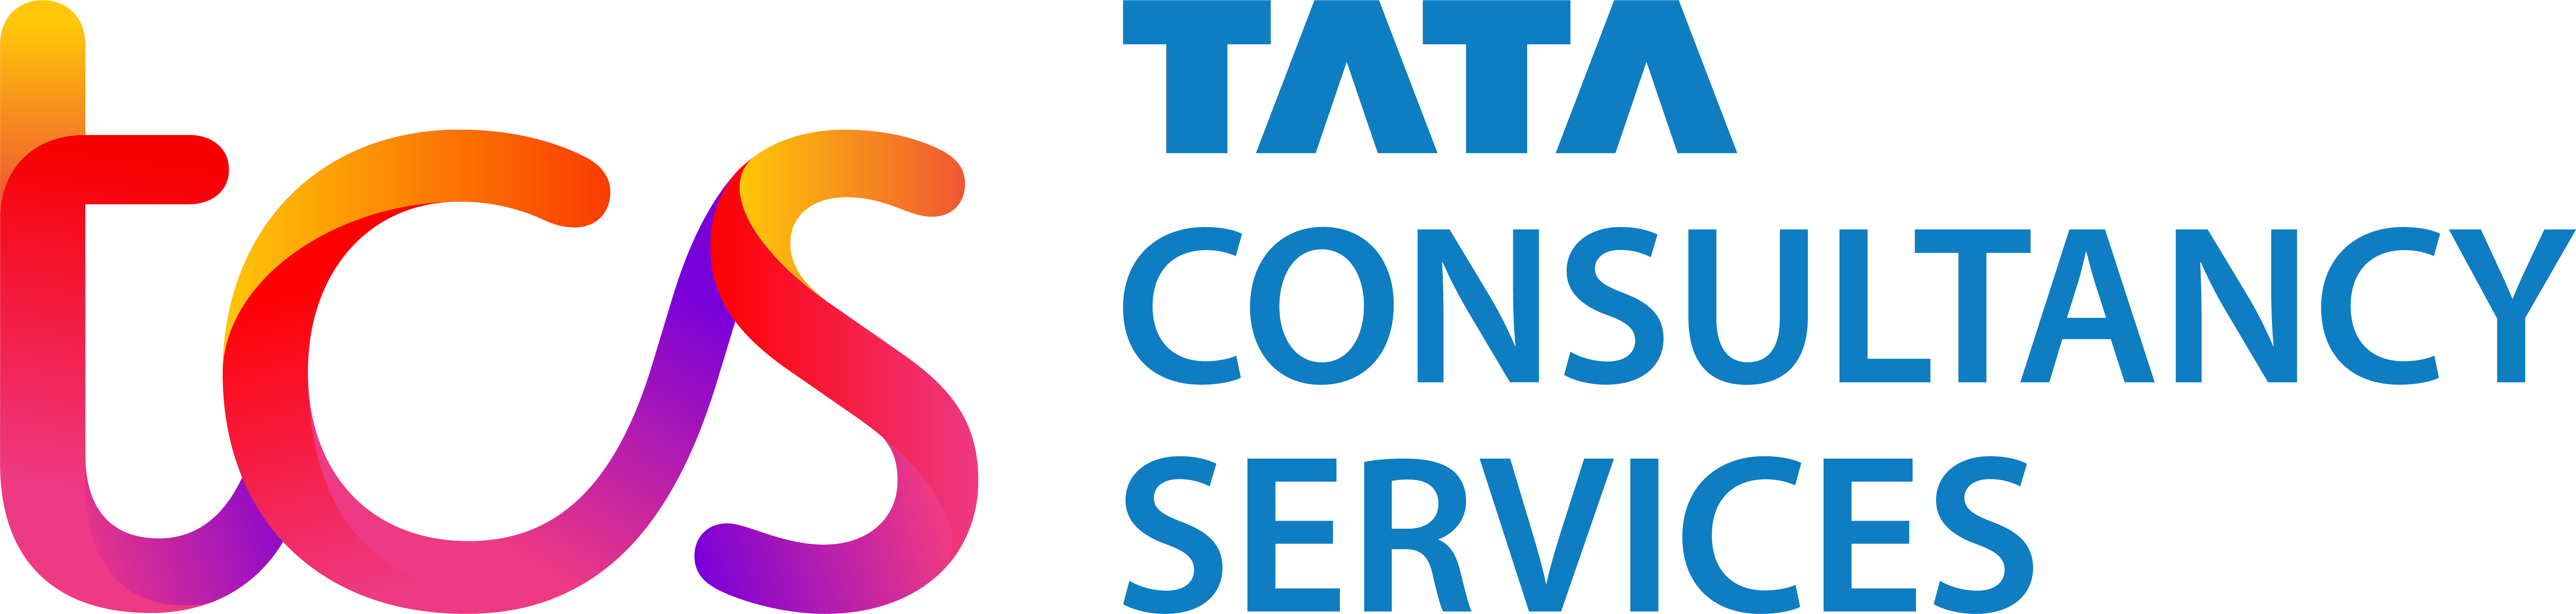 Tata Consultancy Services France logo